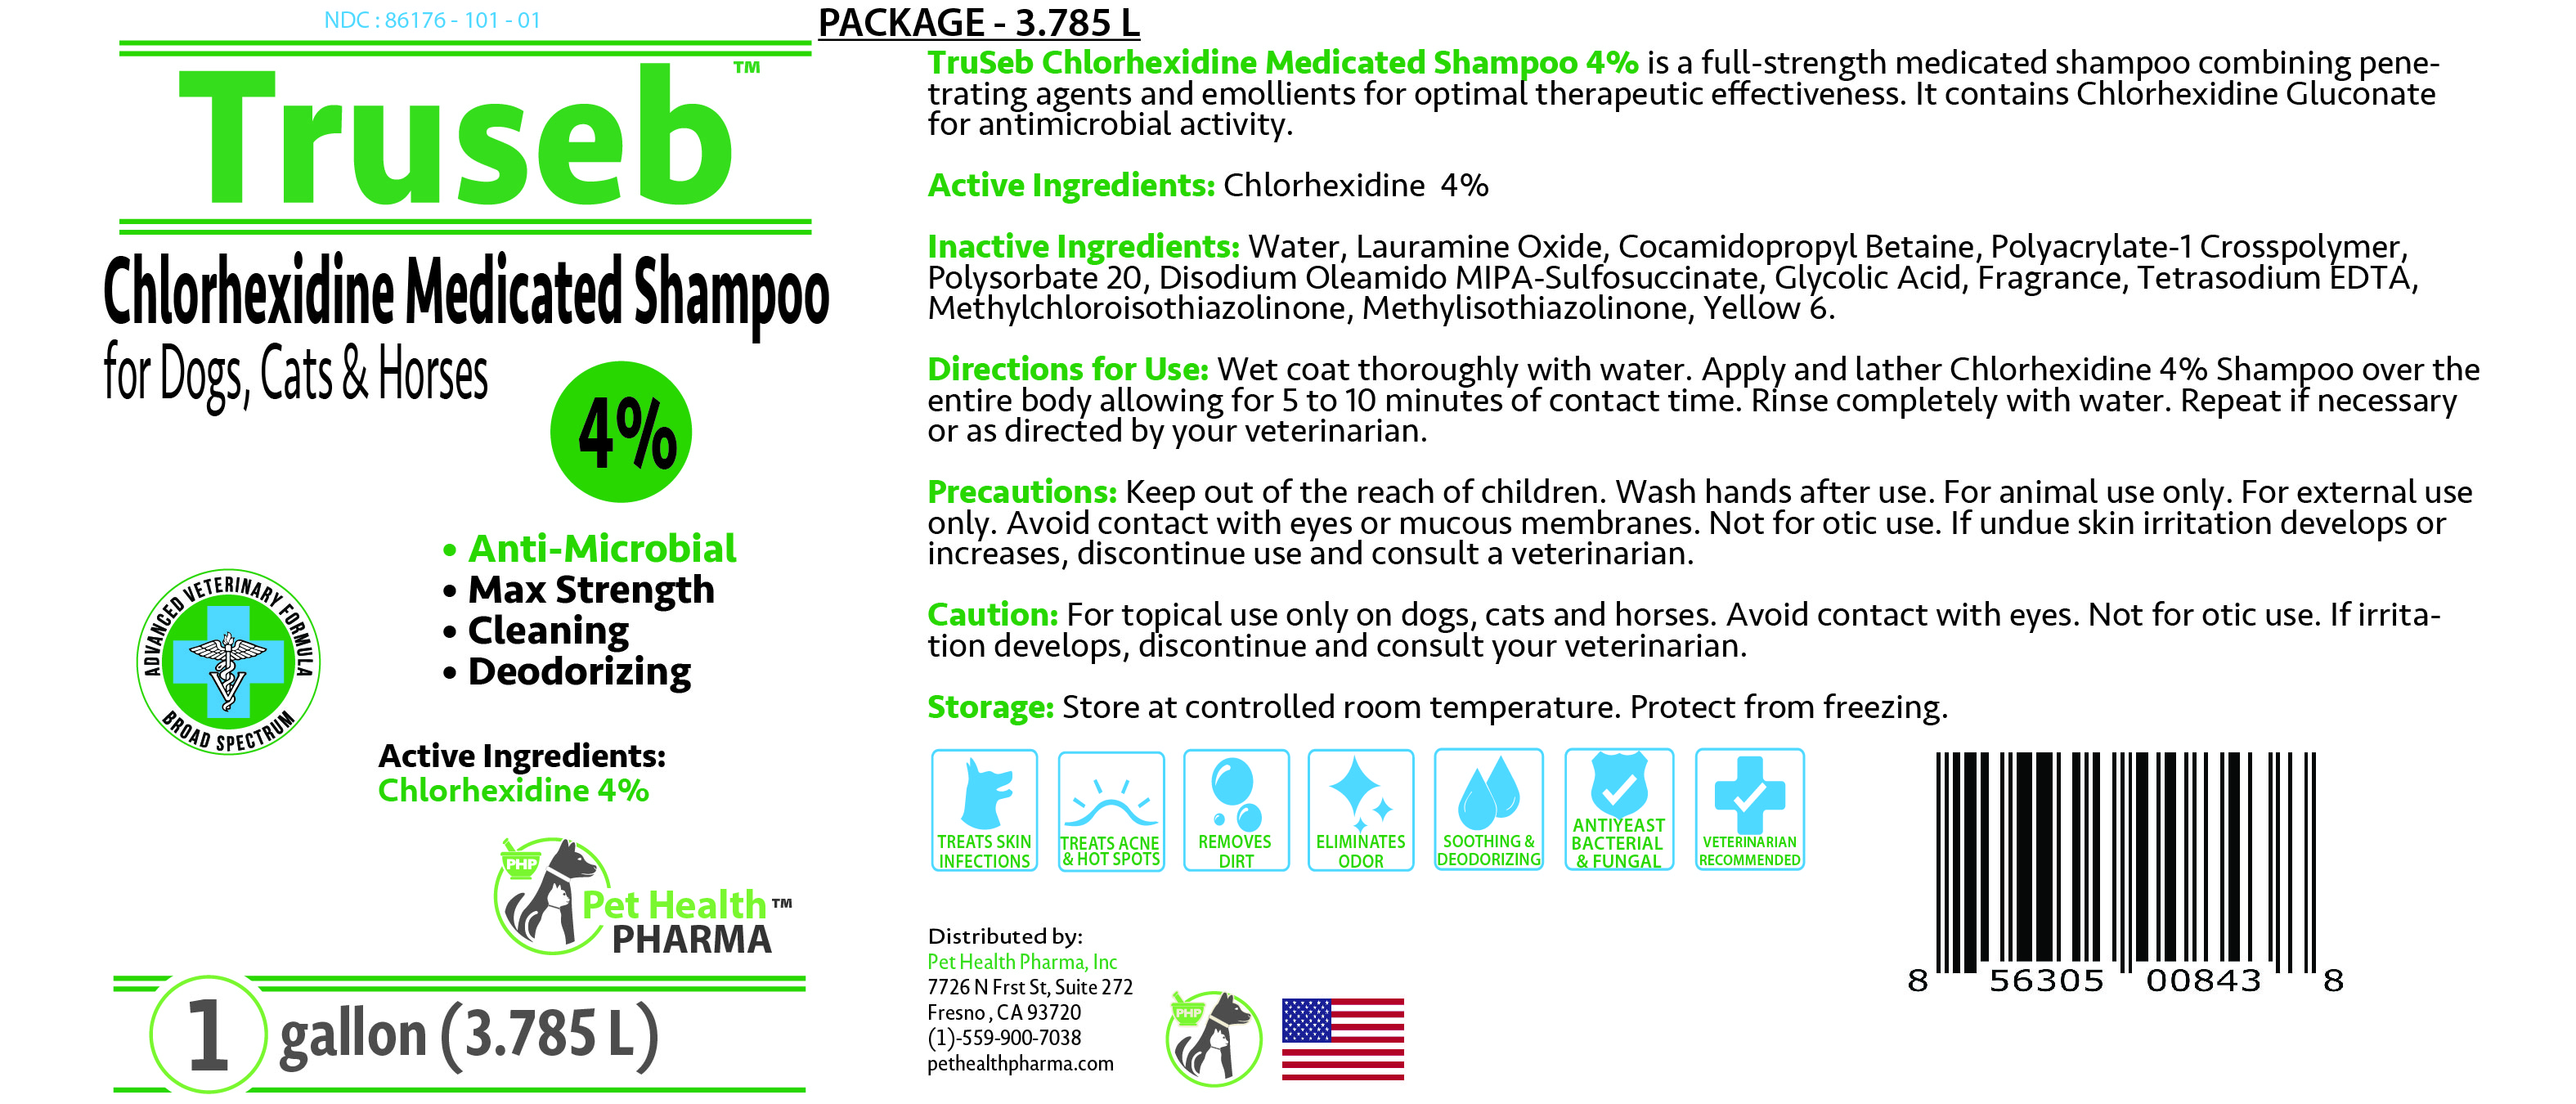 Truseb Chlorhexidine Medicated Shampoo gallon